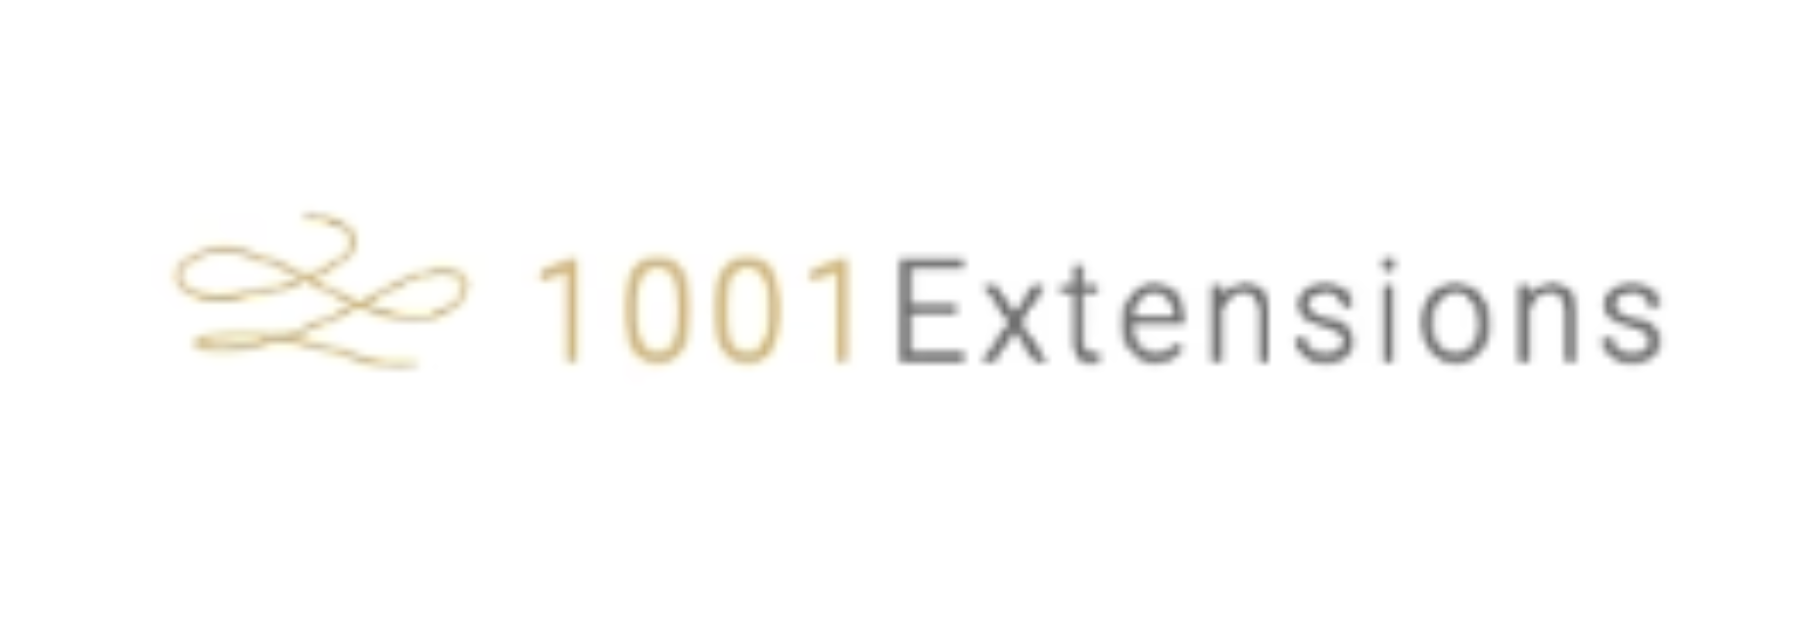 1001extensions logo